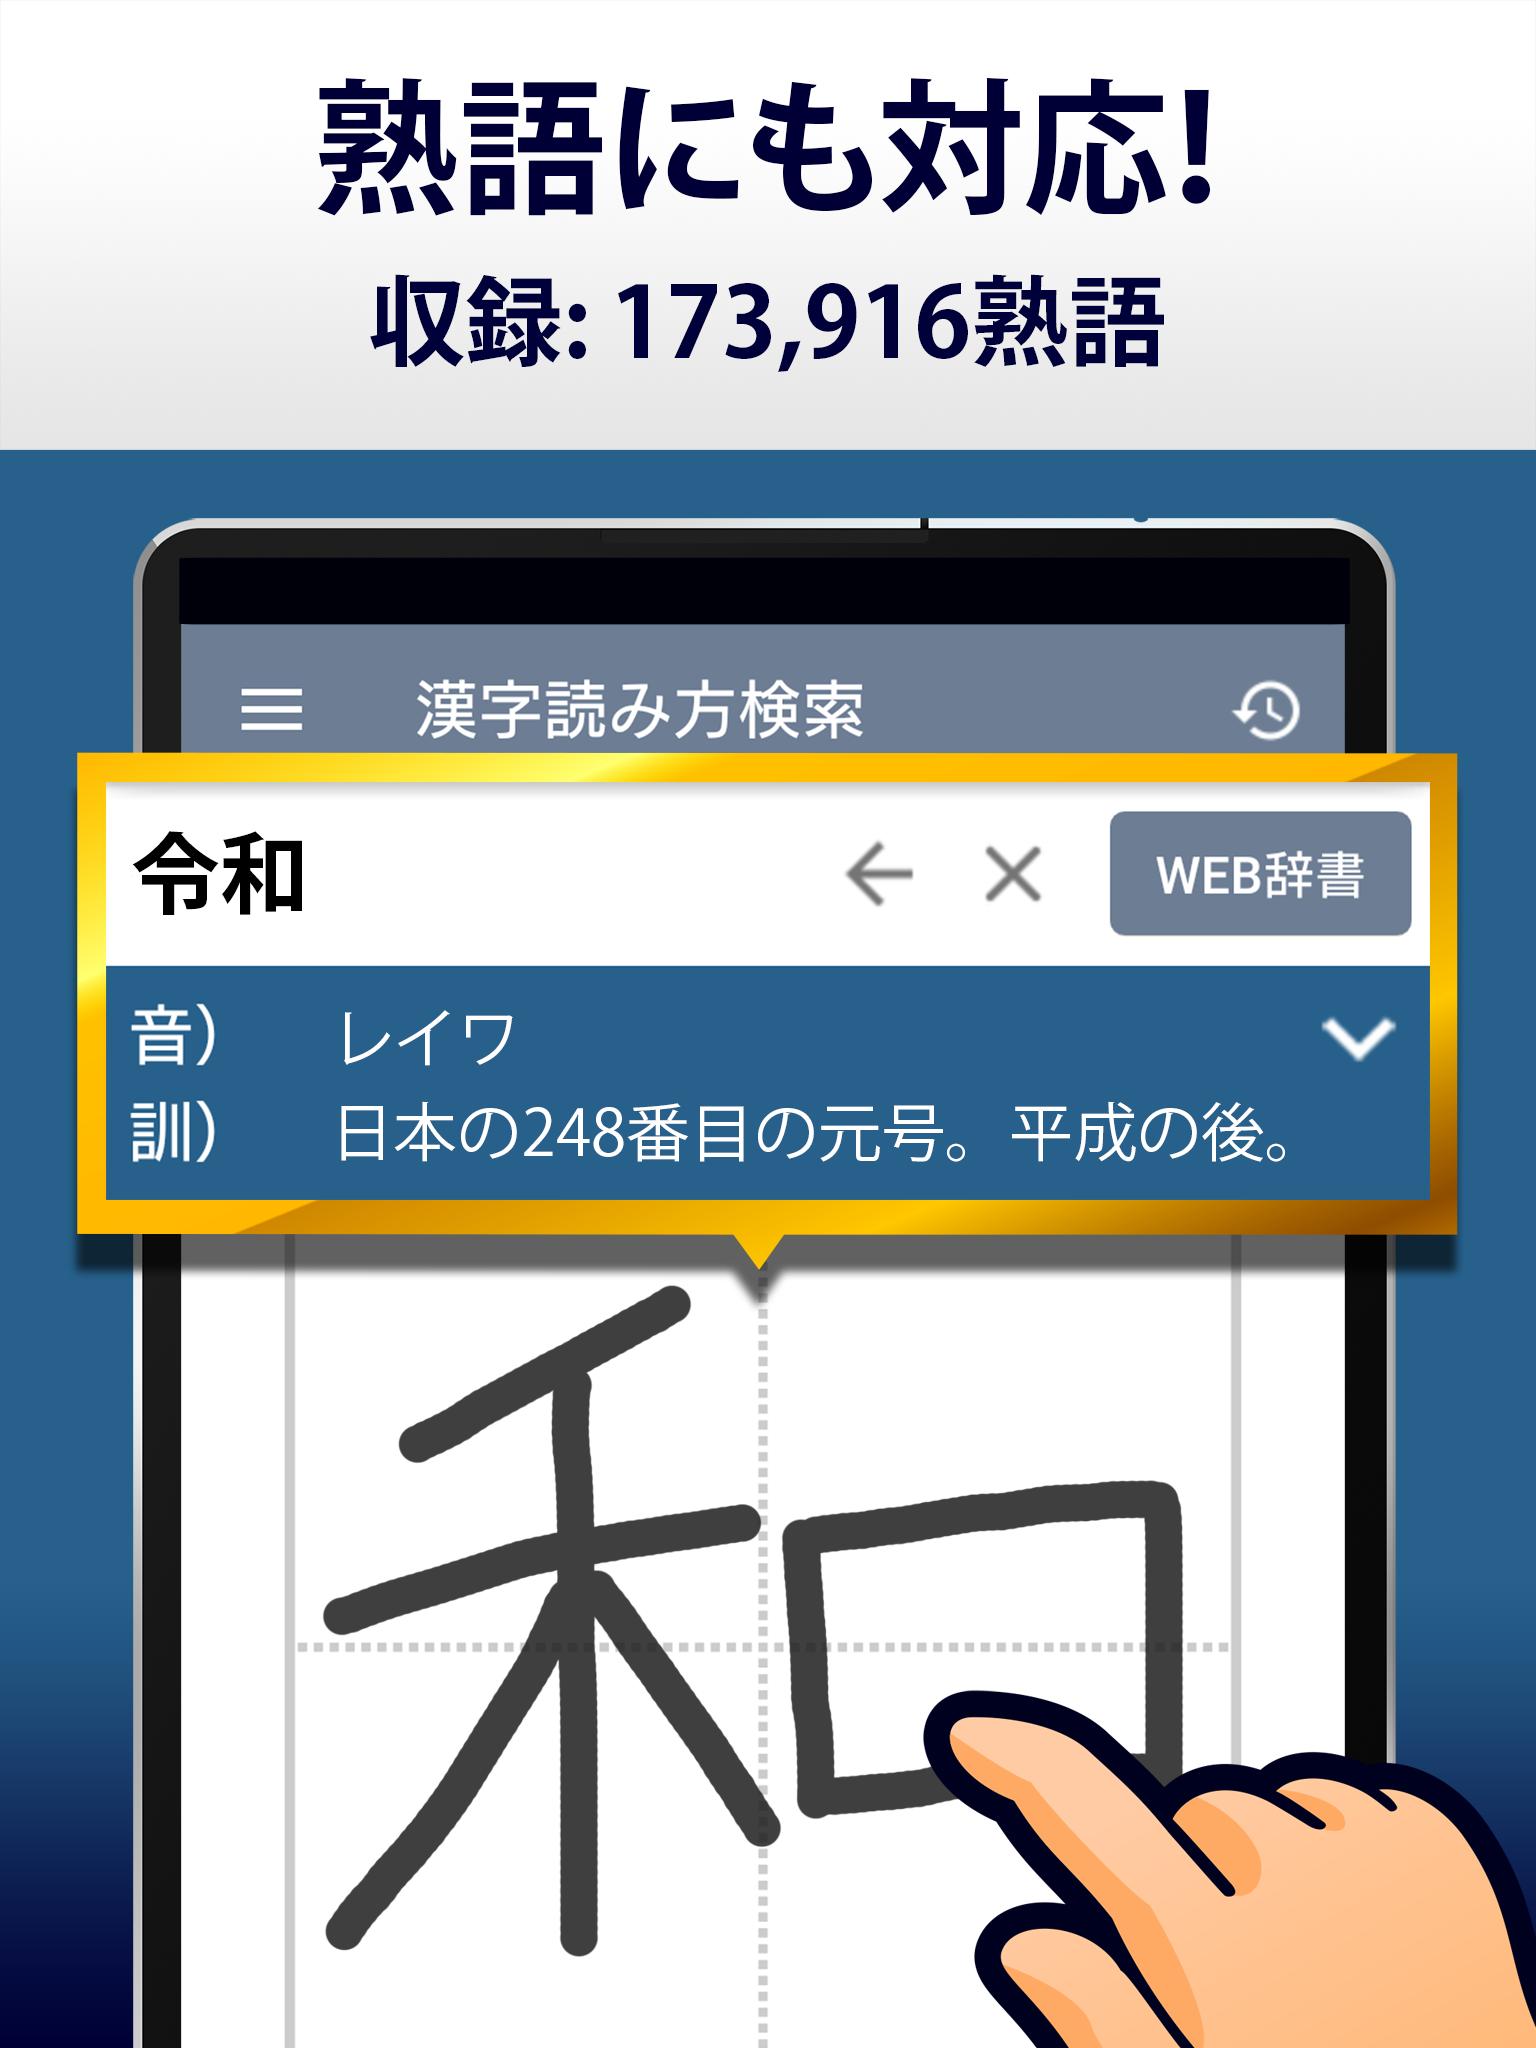 Android 用の 漢字読み方手書き検索辞典 Apk をダウンロード